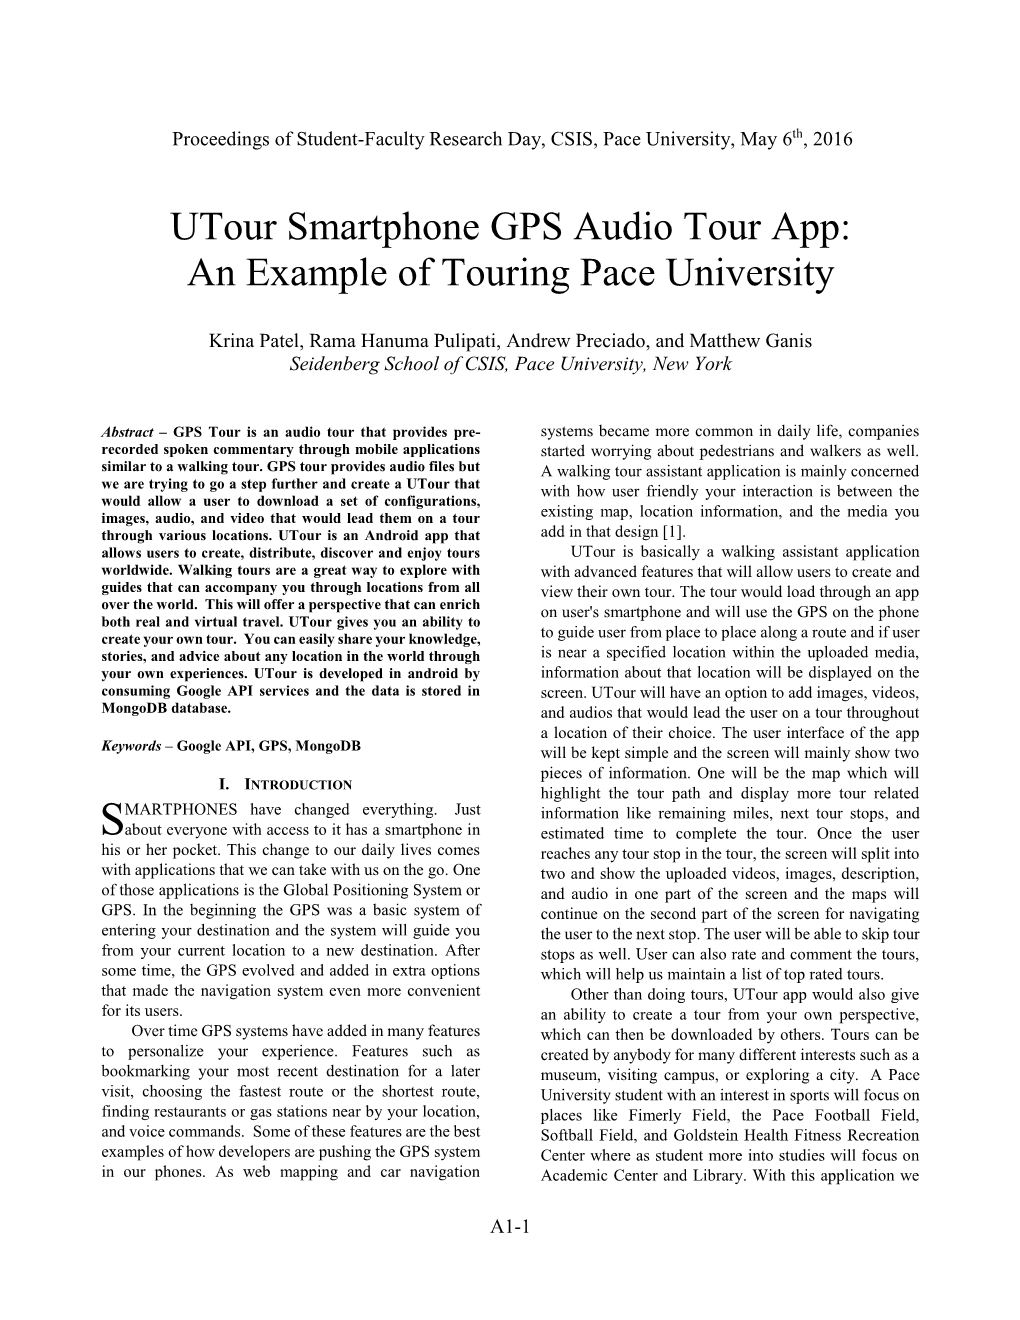 Utour Smartphone GPS Audio Tour App: an Example of Touring Pace University